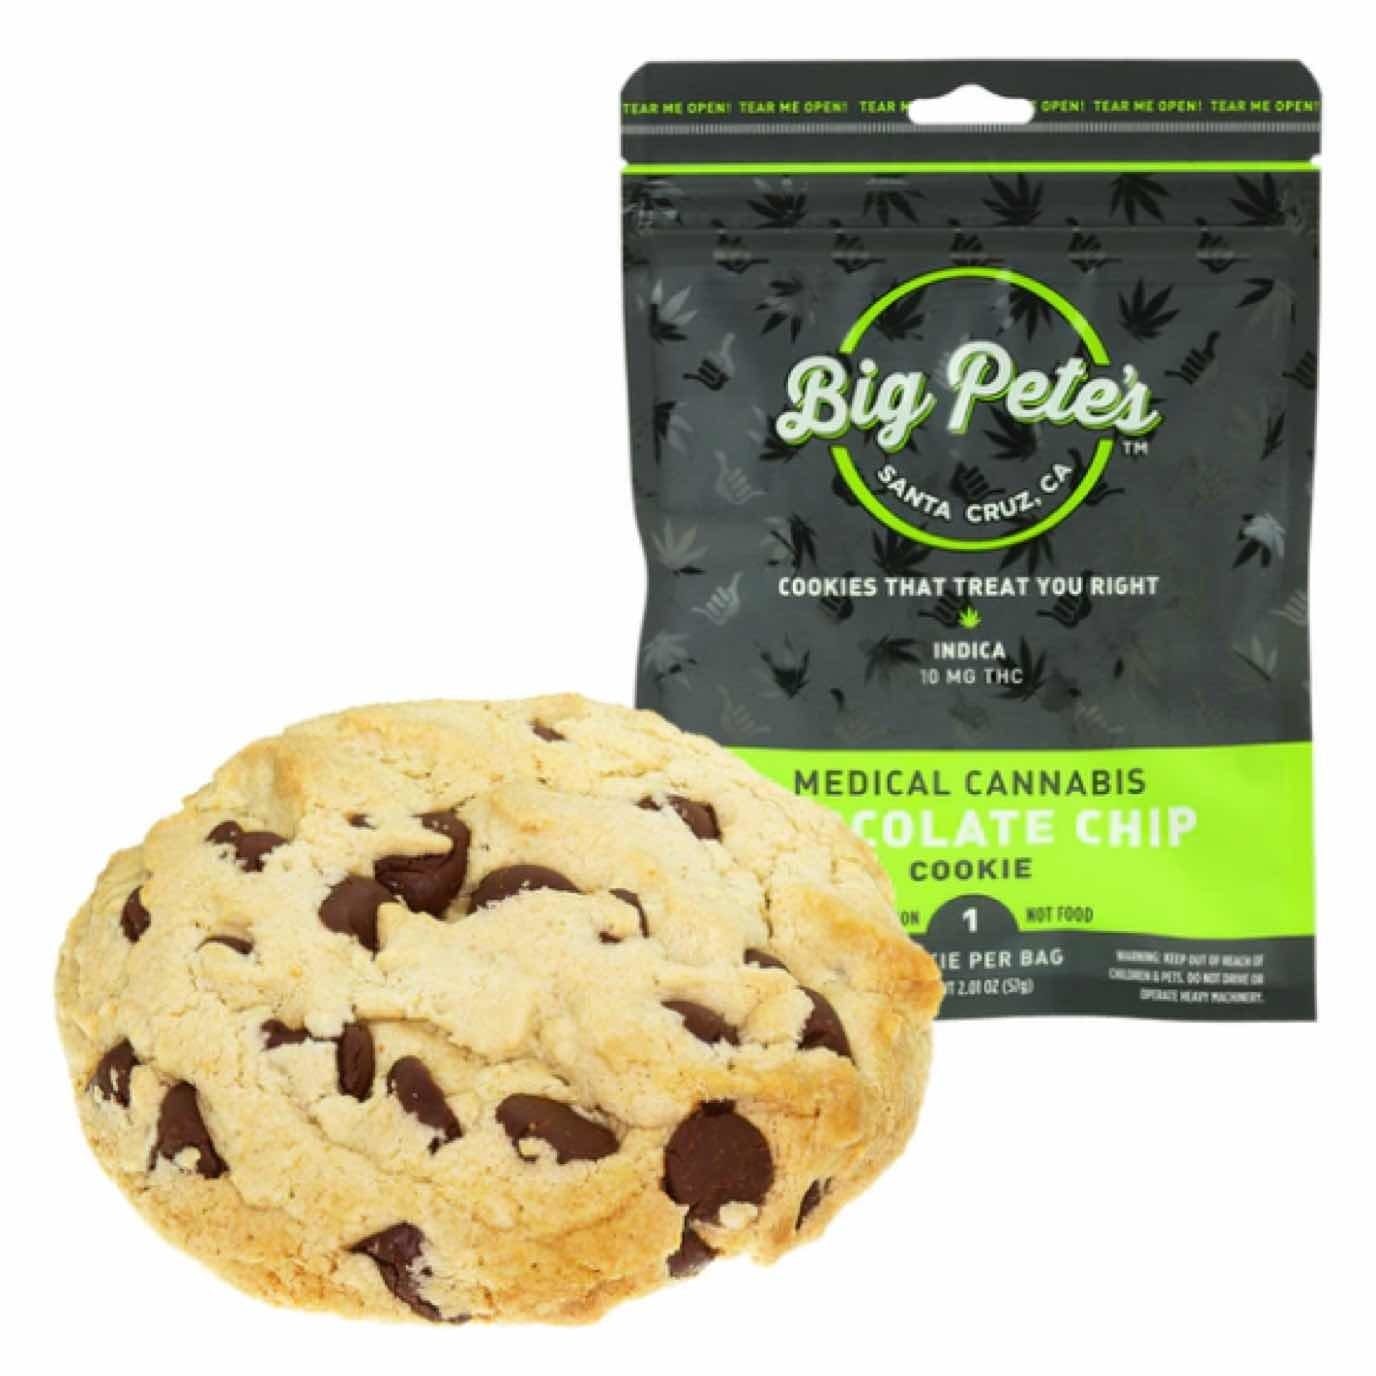 Chocolate Chip Cookie (I) Single, 10MG THC (BIG PETE'S)